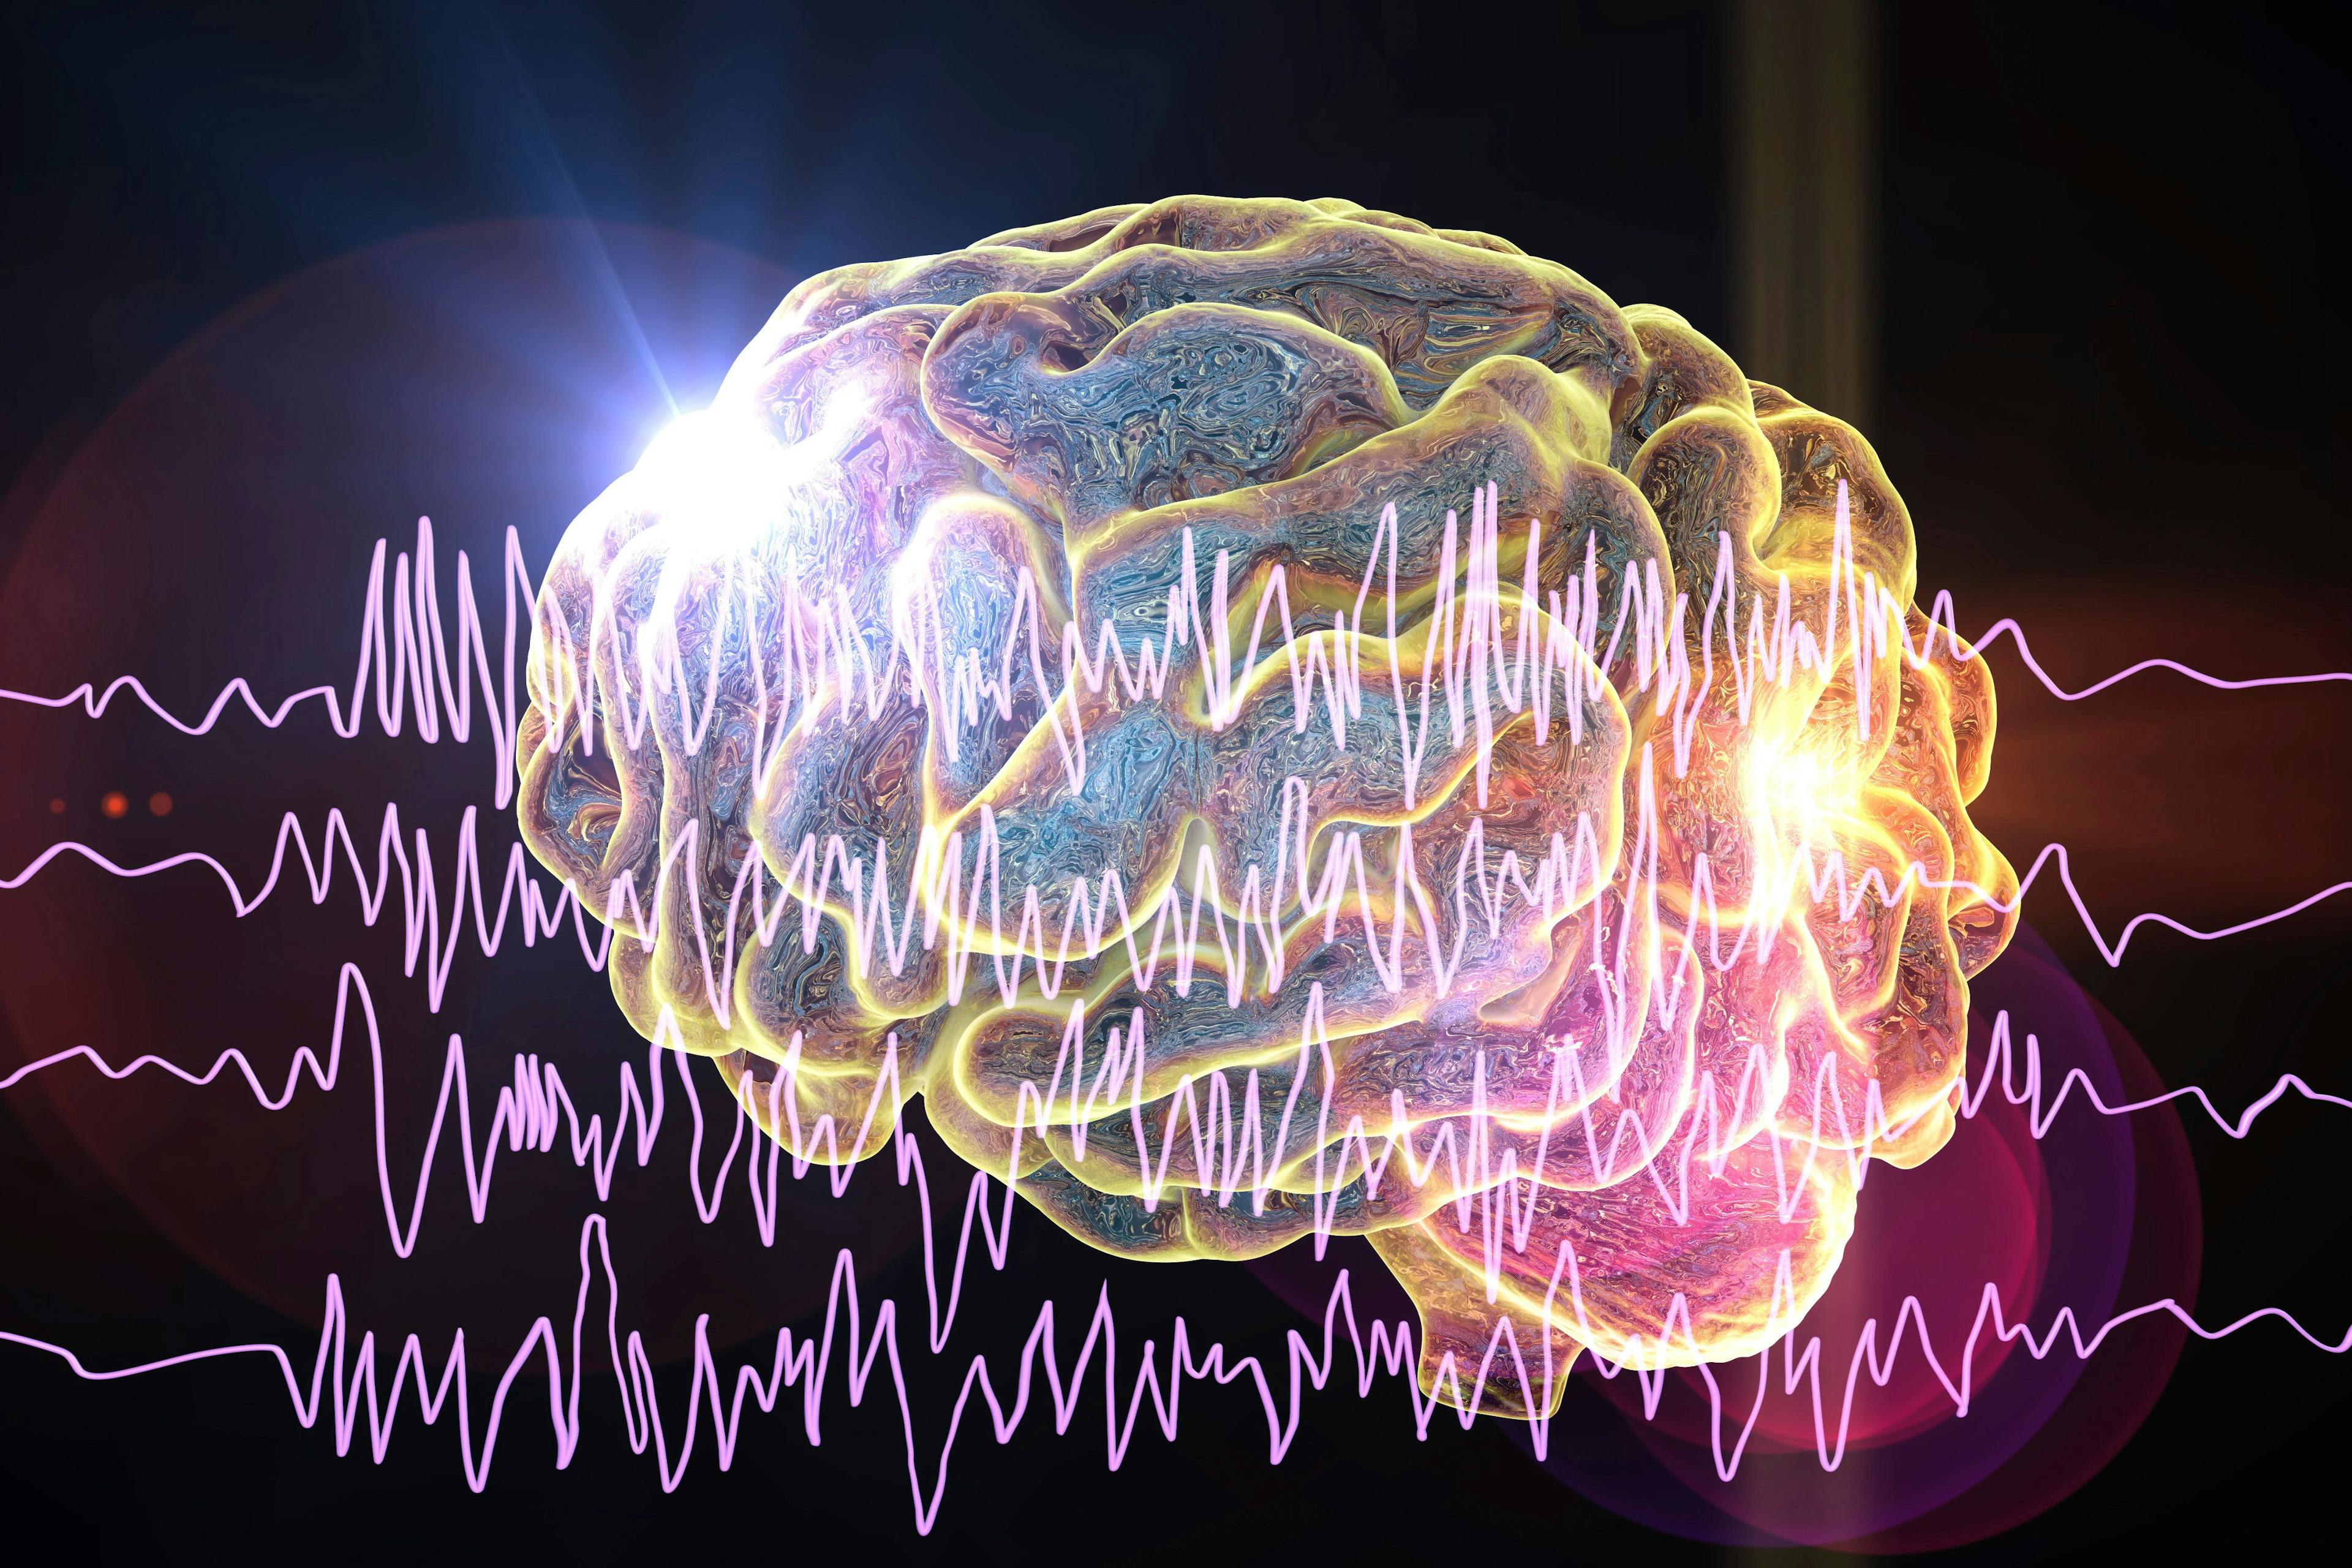 brain with epilepsy | Image credit: Dr_Microbe - stock.adobe.com